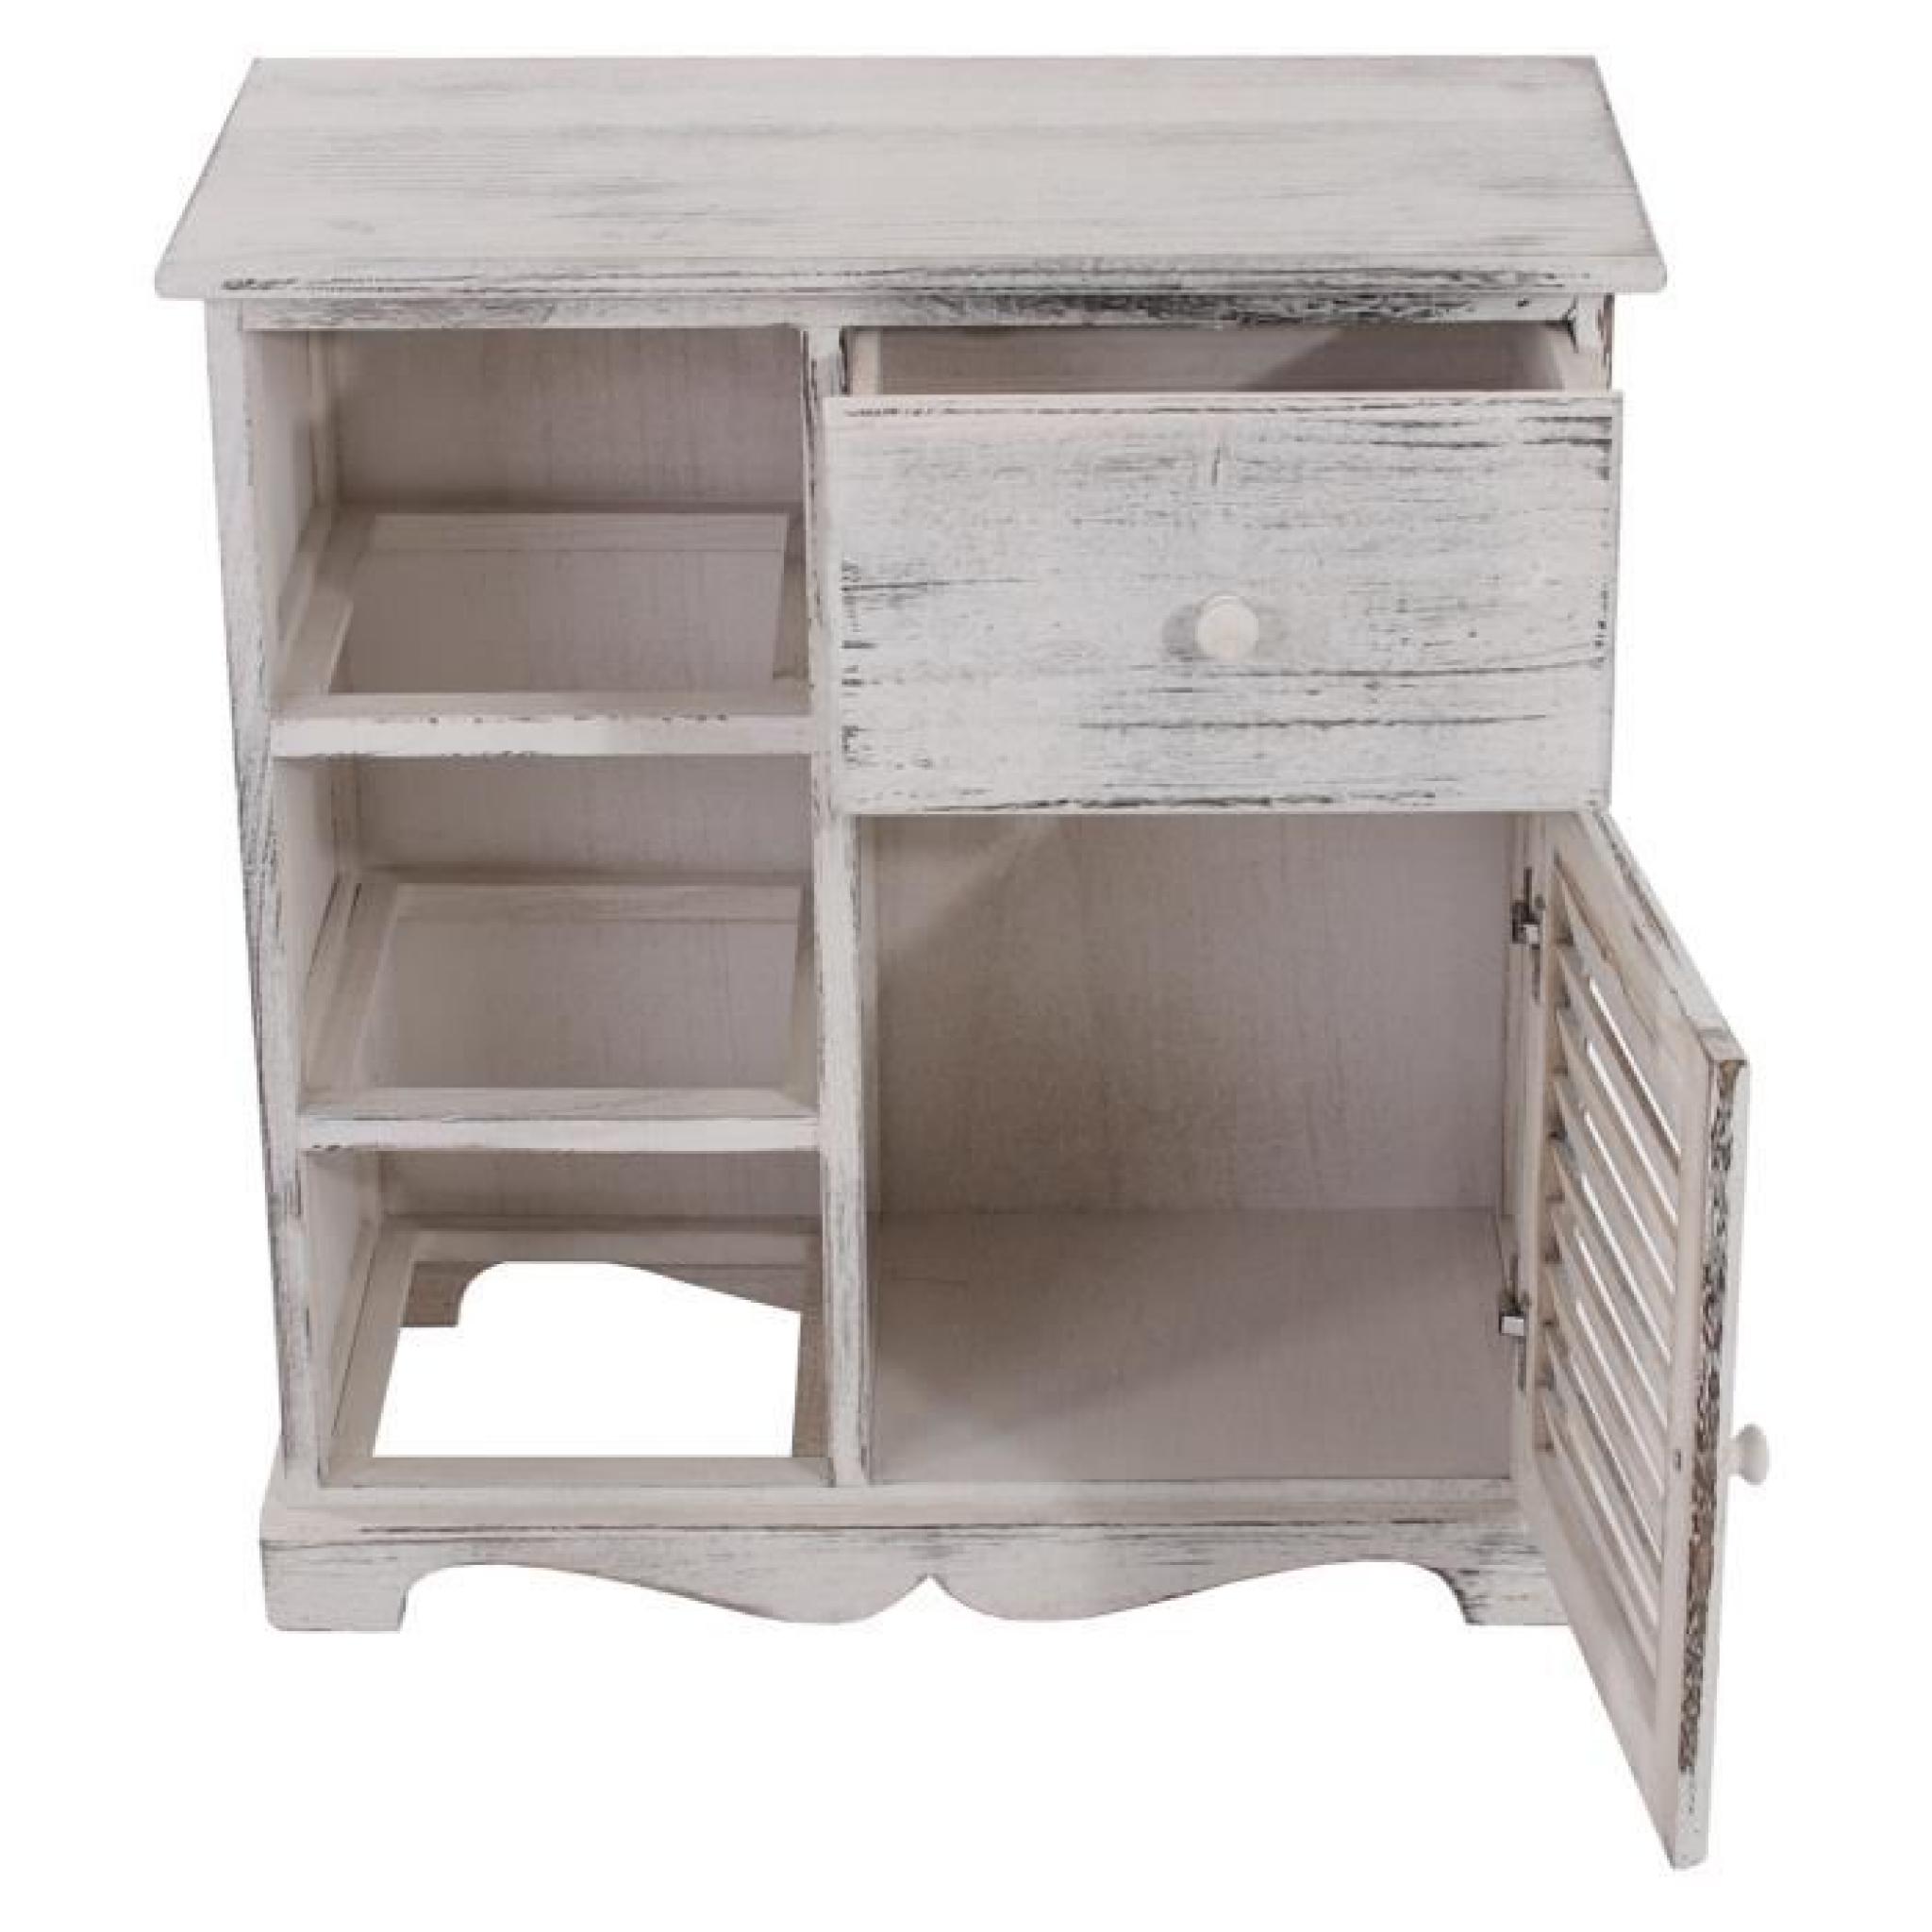 Commode / table d'appoint / armoire,3 paniers,1 tiroir,60x30x63cm, shabby, vintage, blanc. pas cher